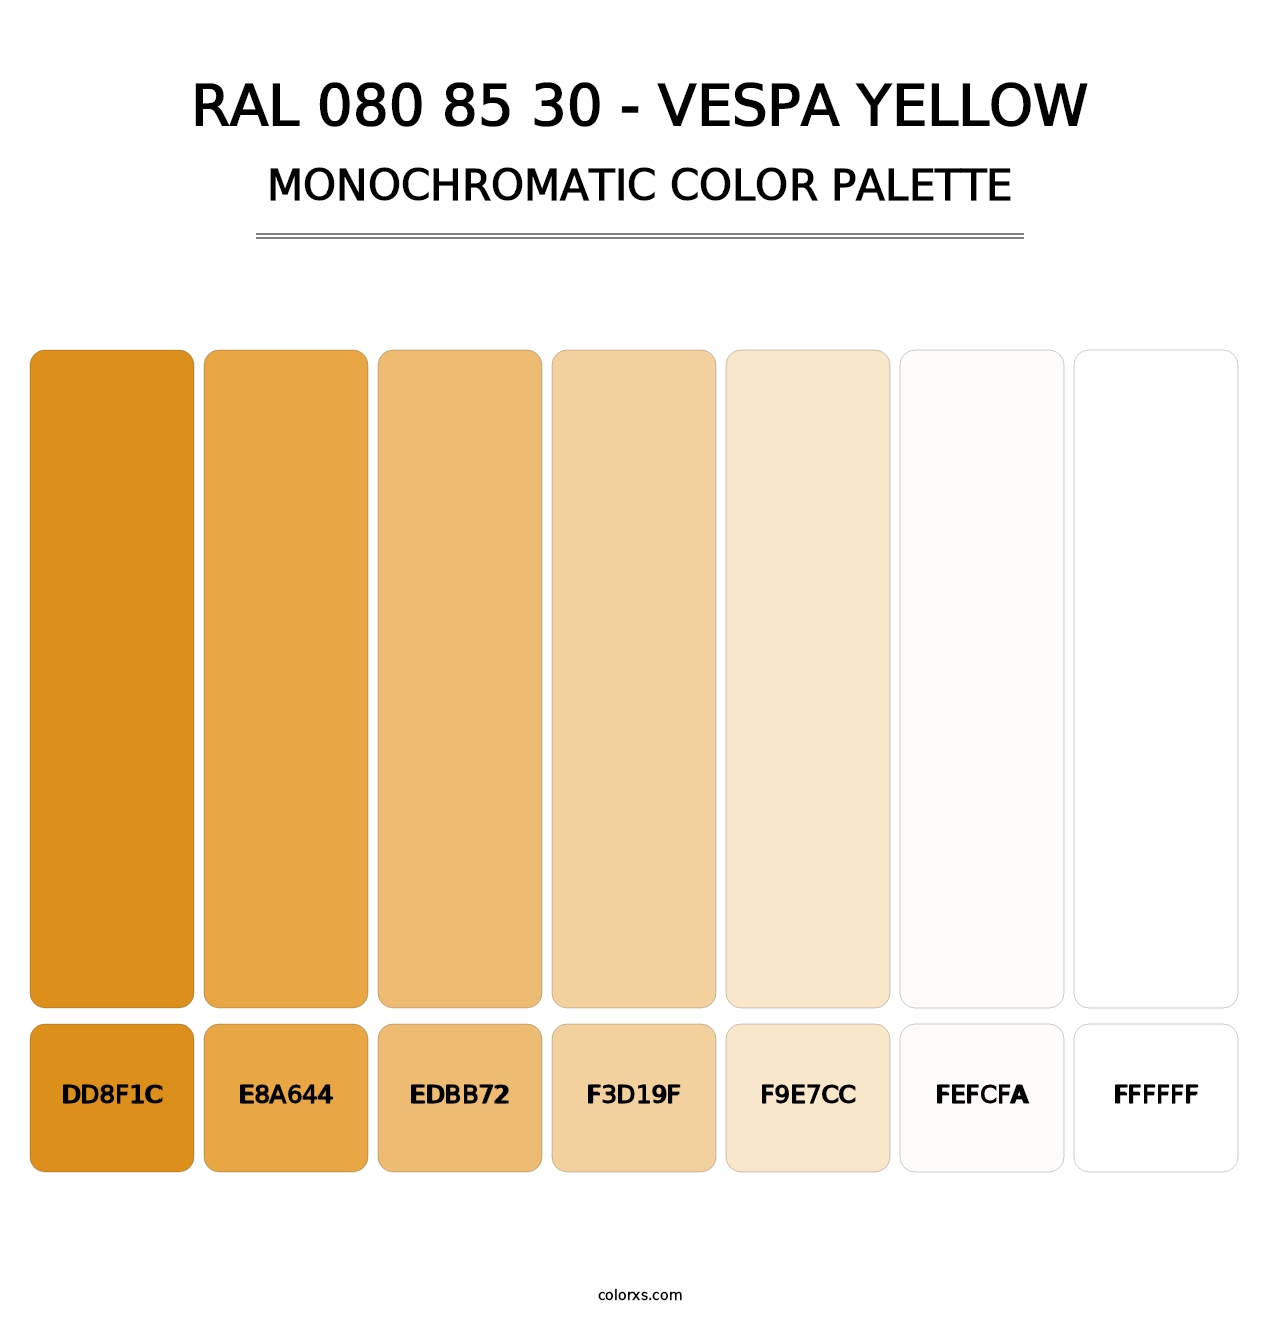 RAL 080 85 30 - Vespa Yellow - Monochromatic Color Palette